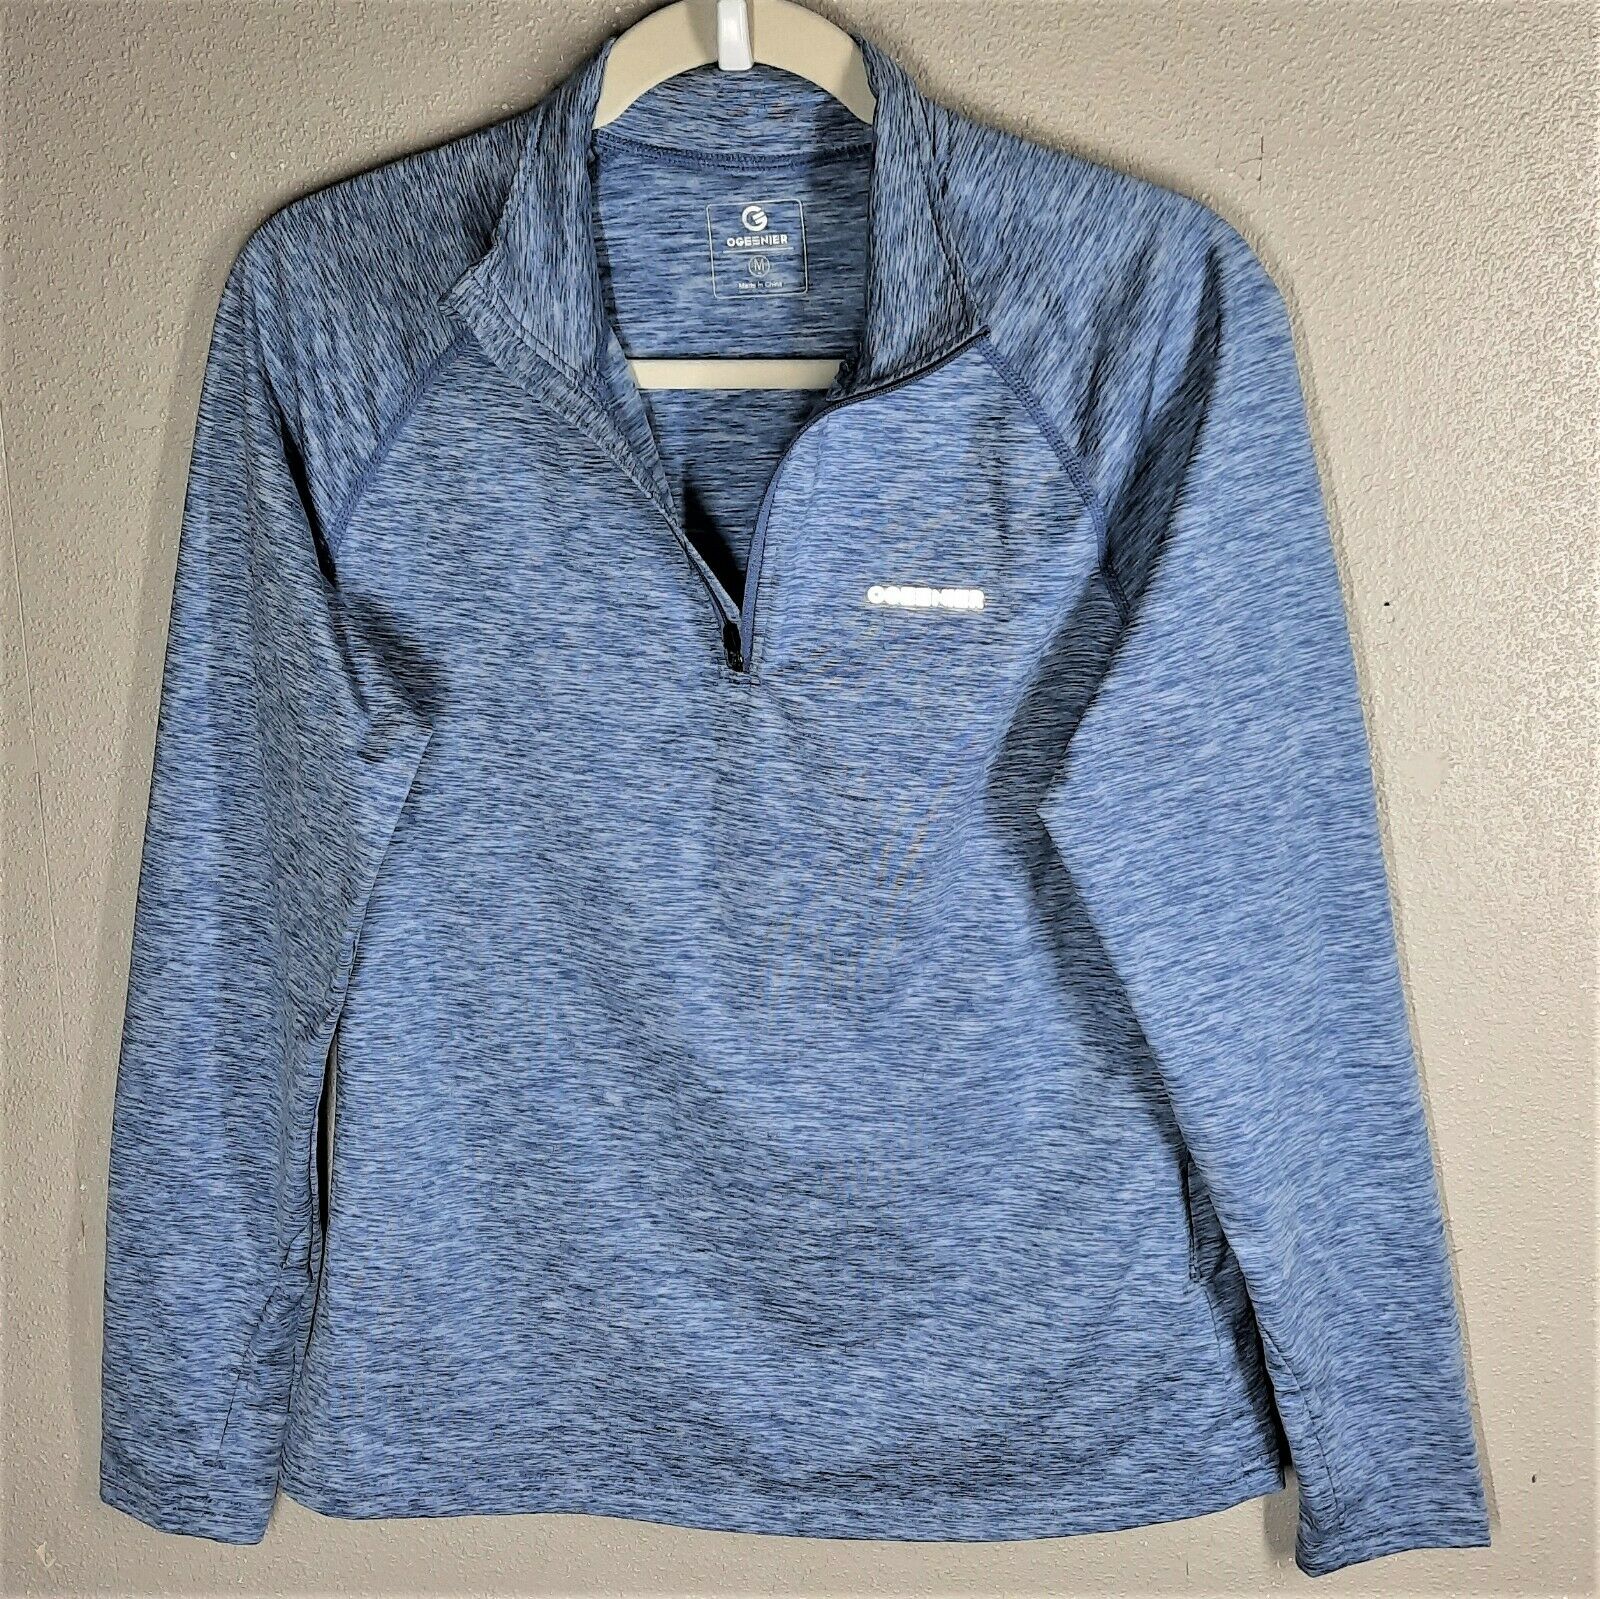 Ogeenier Womens Blue Athletic Jacket 1/4 Zip Size M